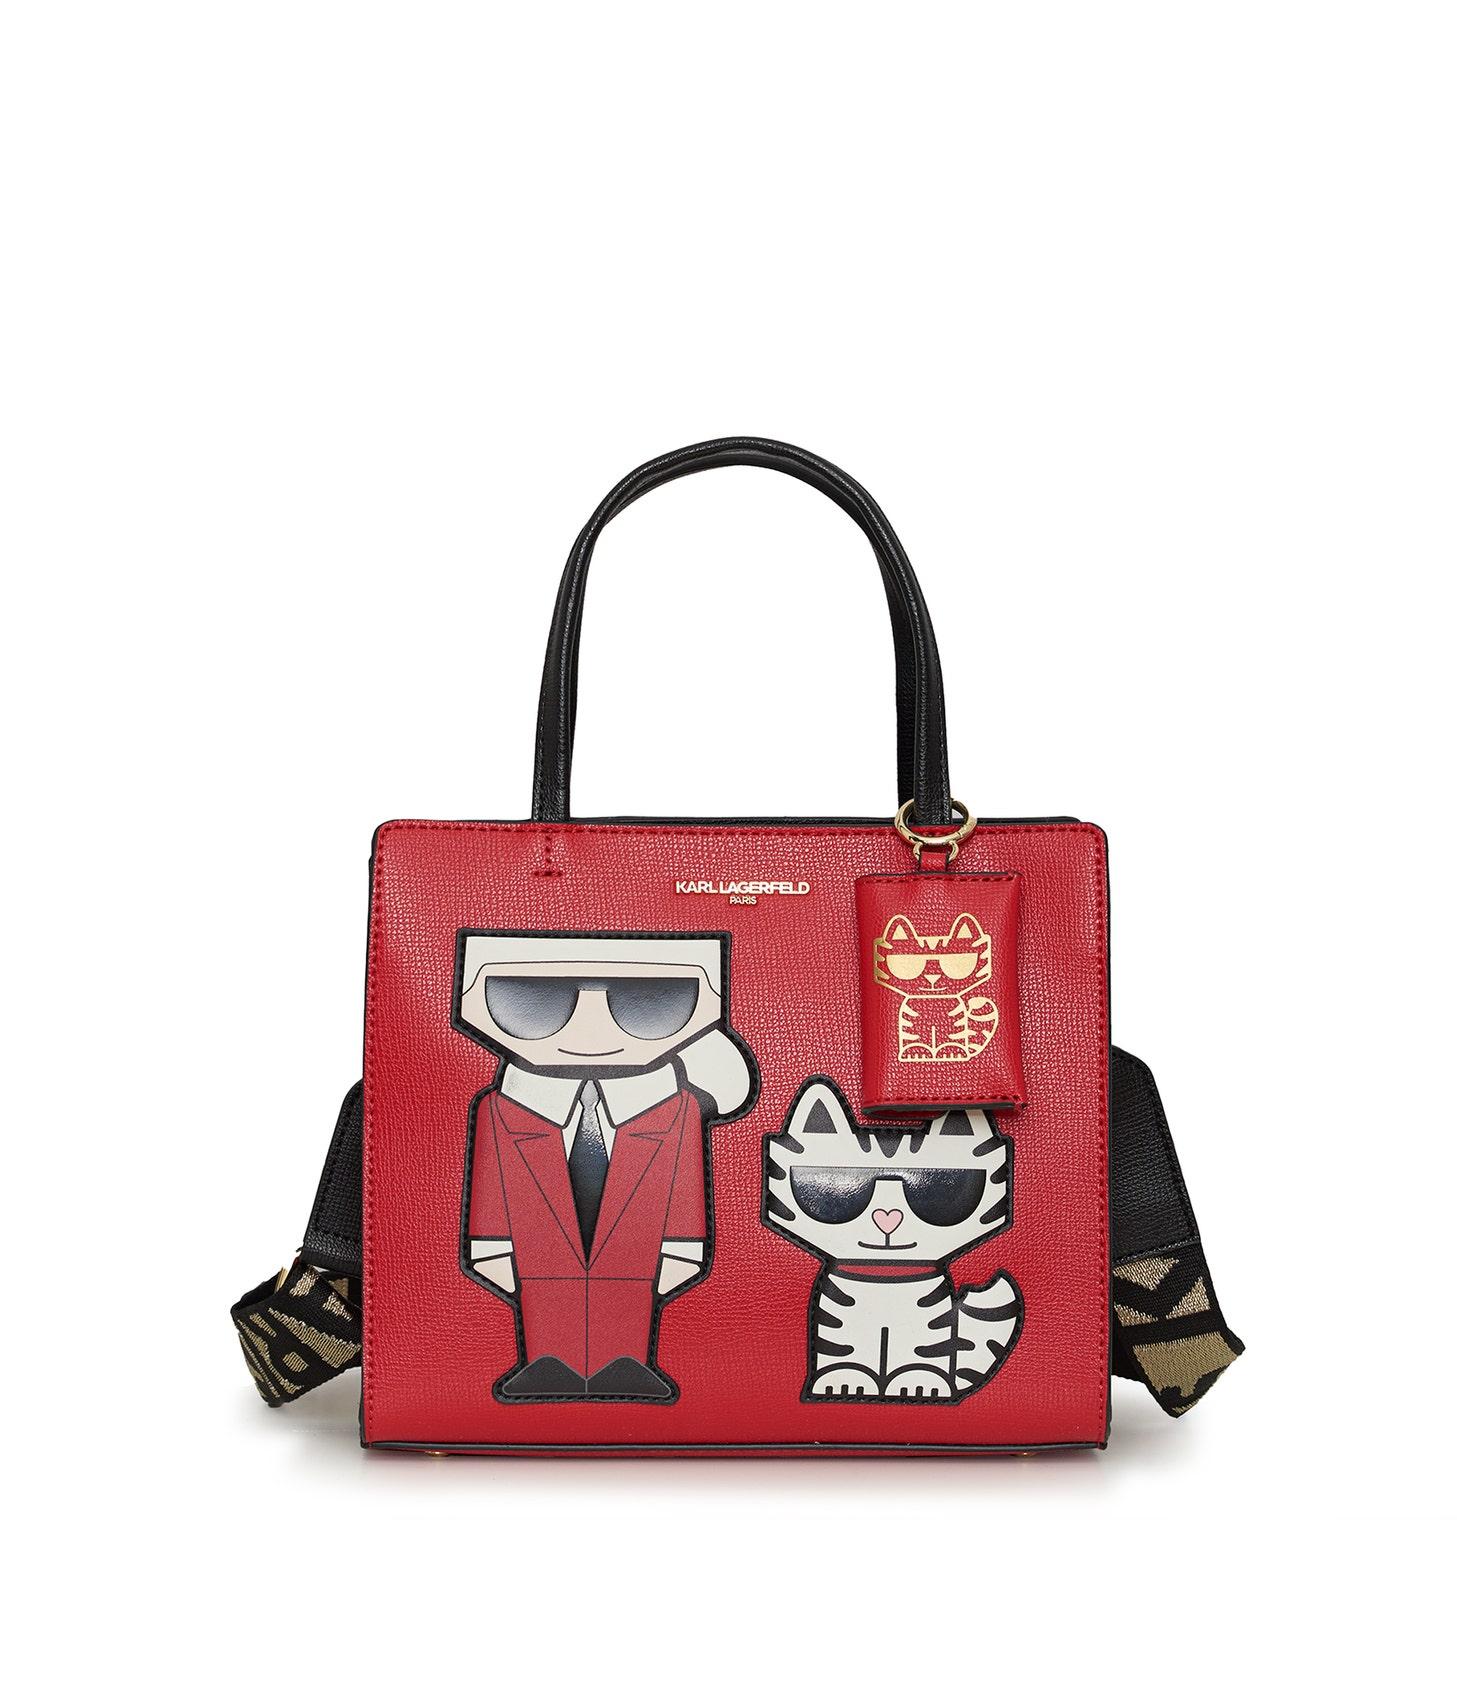 NWT - Woman's Karl Lagerfeld Paris Maybelle Satchel Handbag